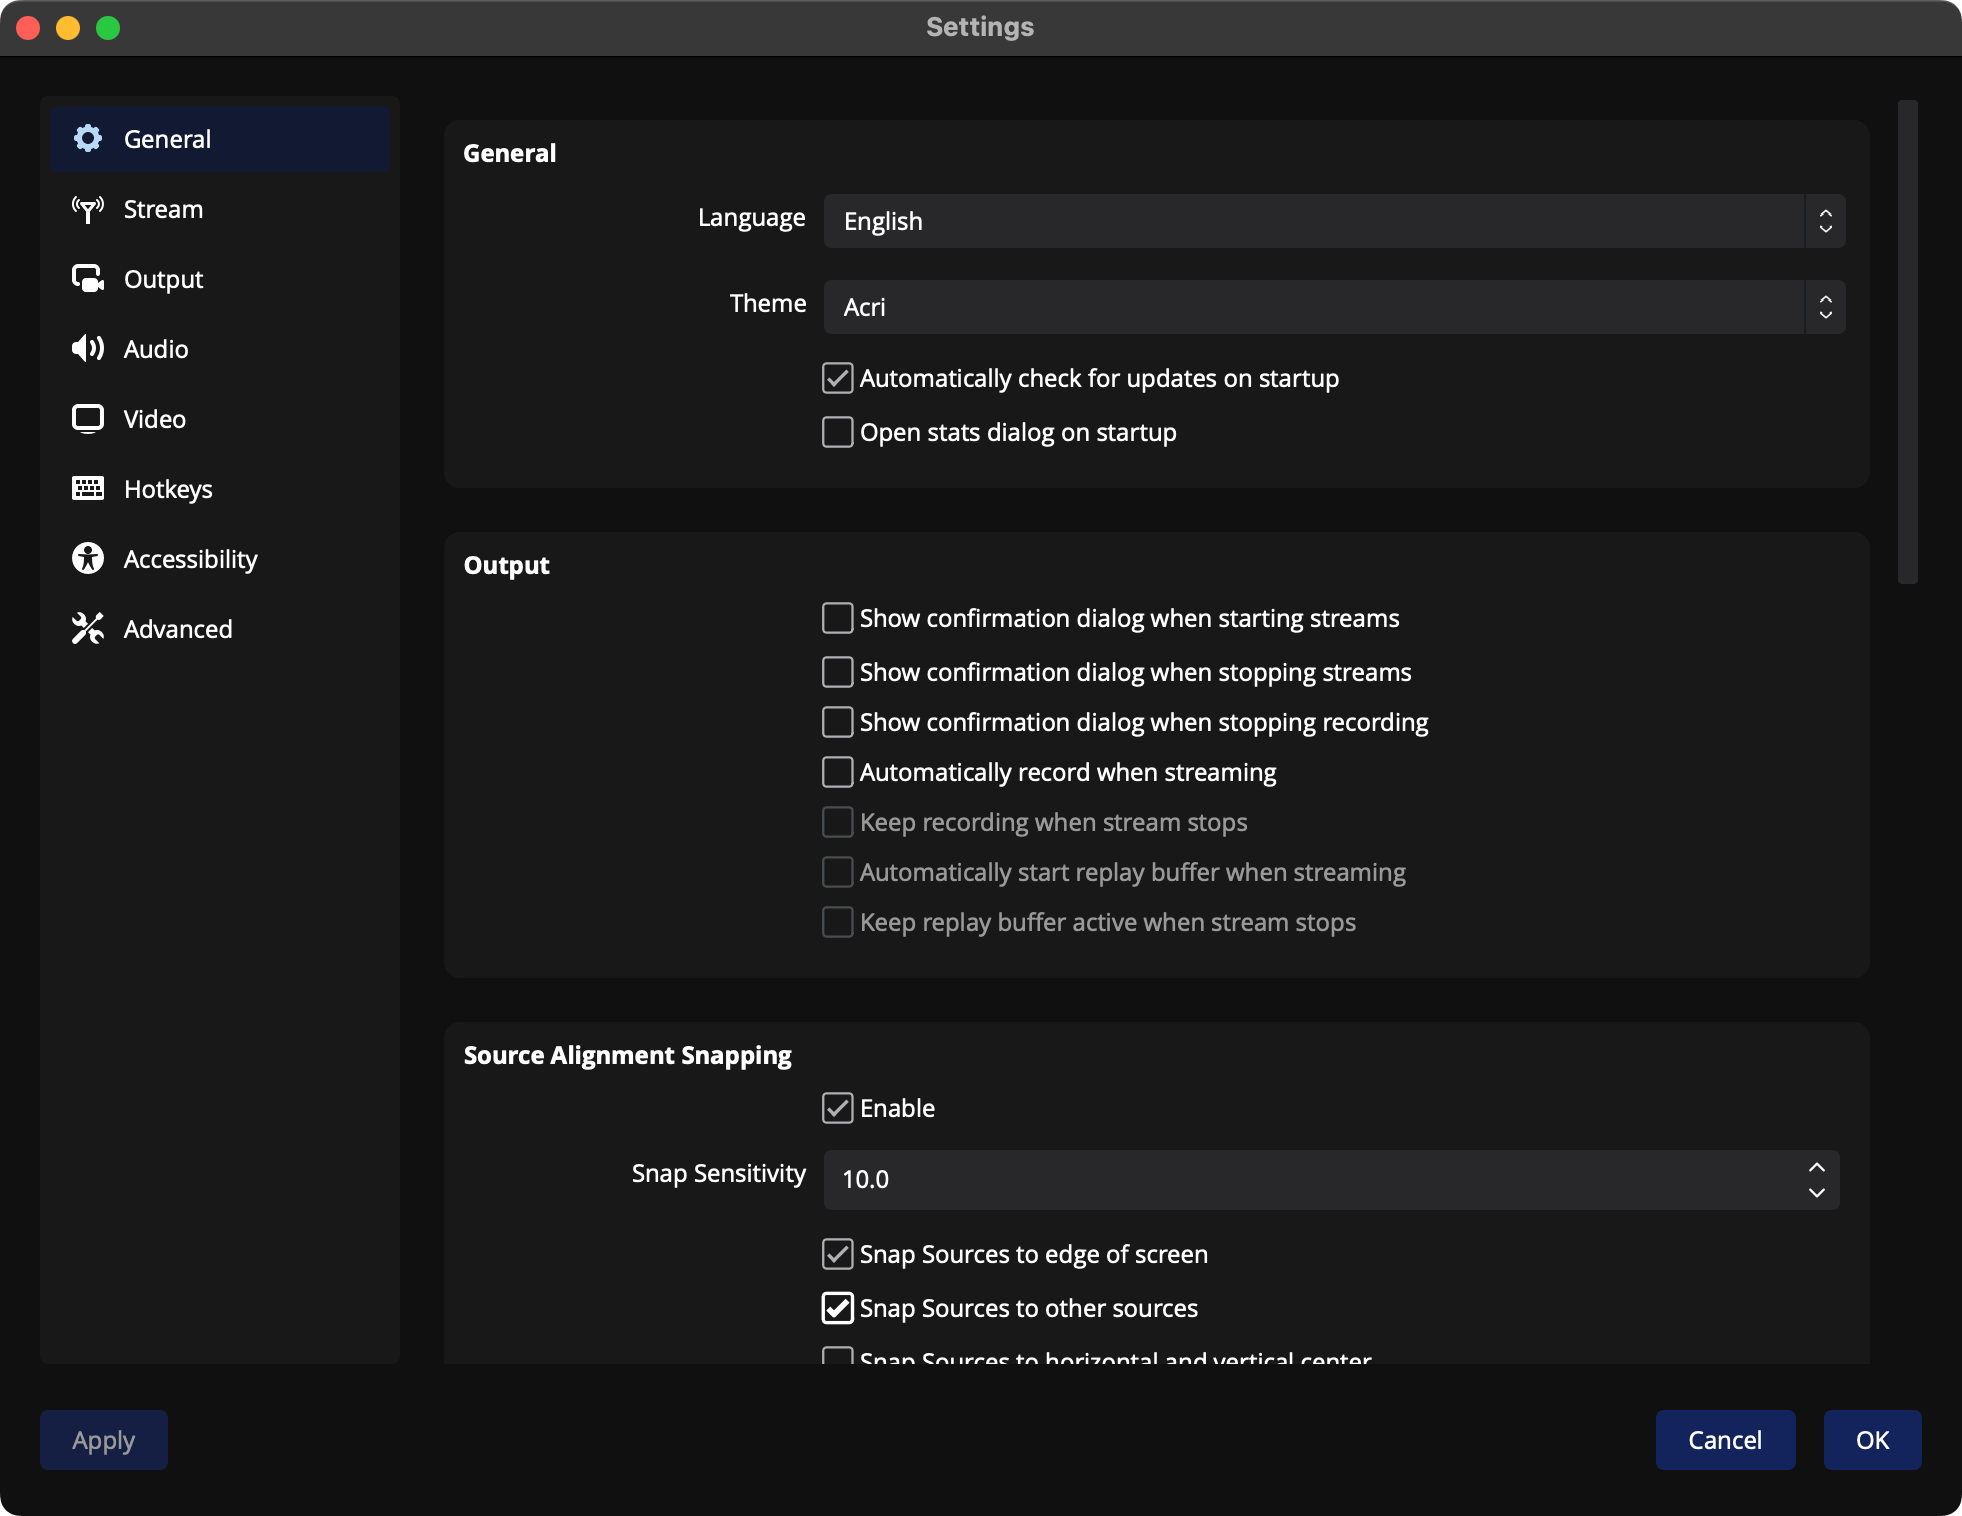 OBS Studio's settings window showing the Acri theme